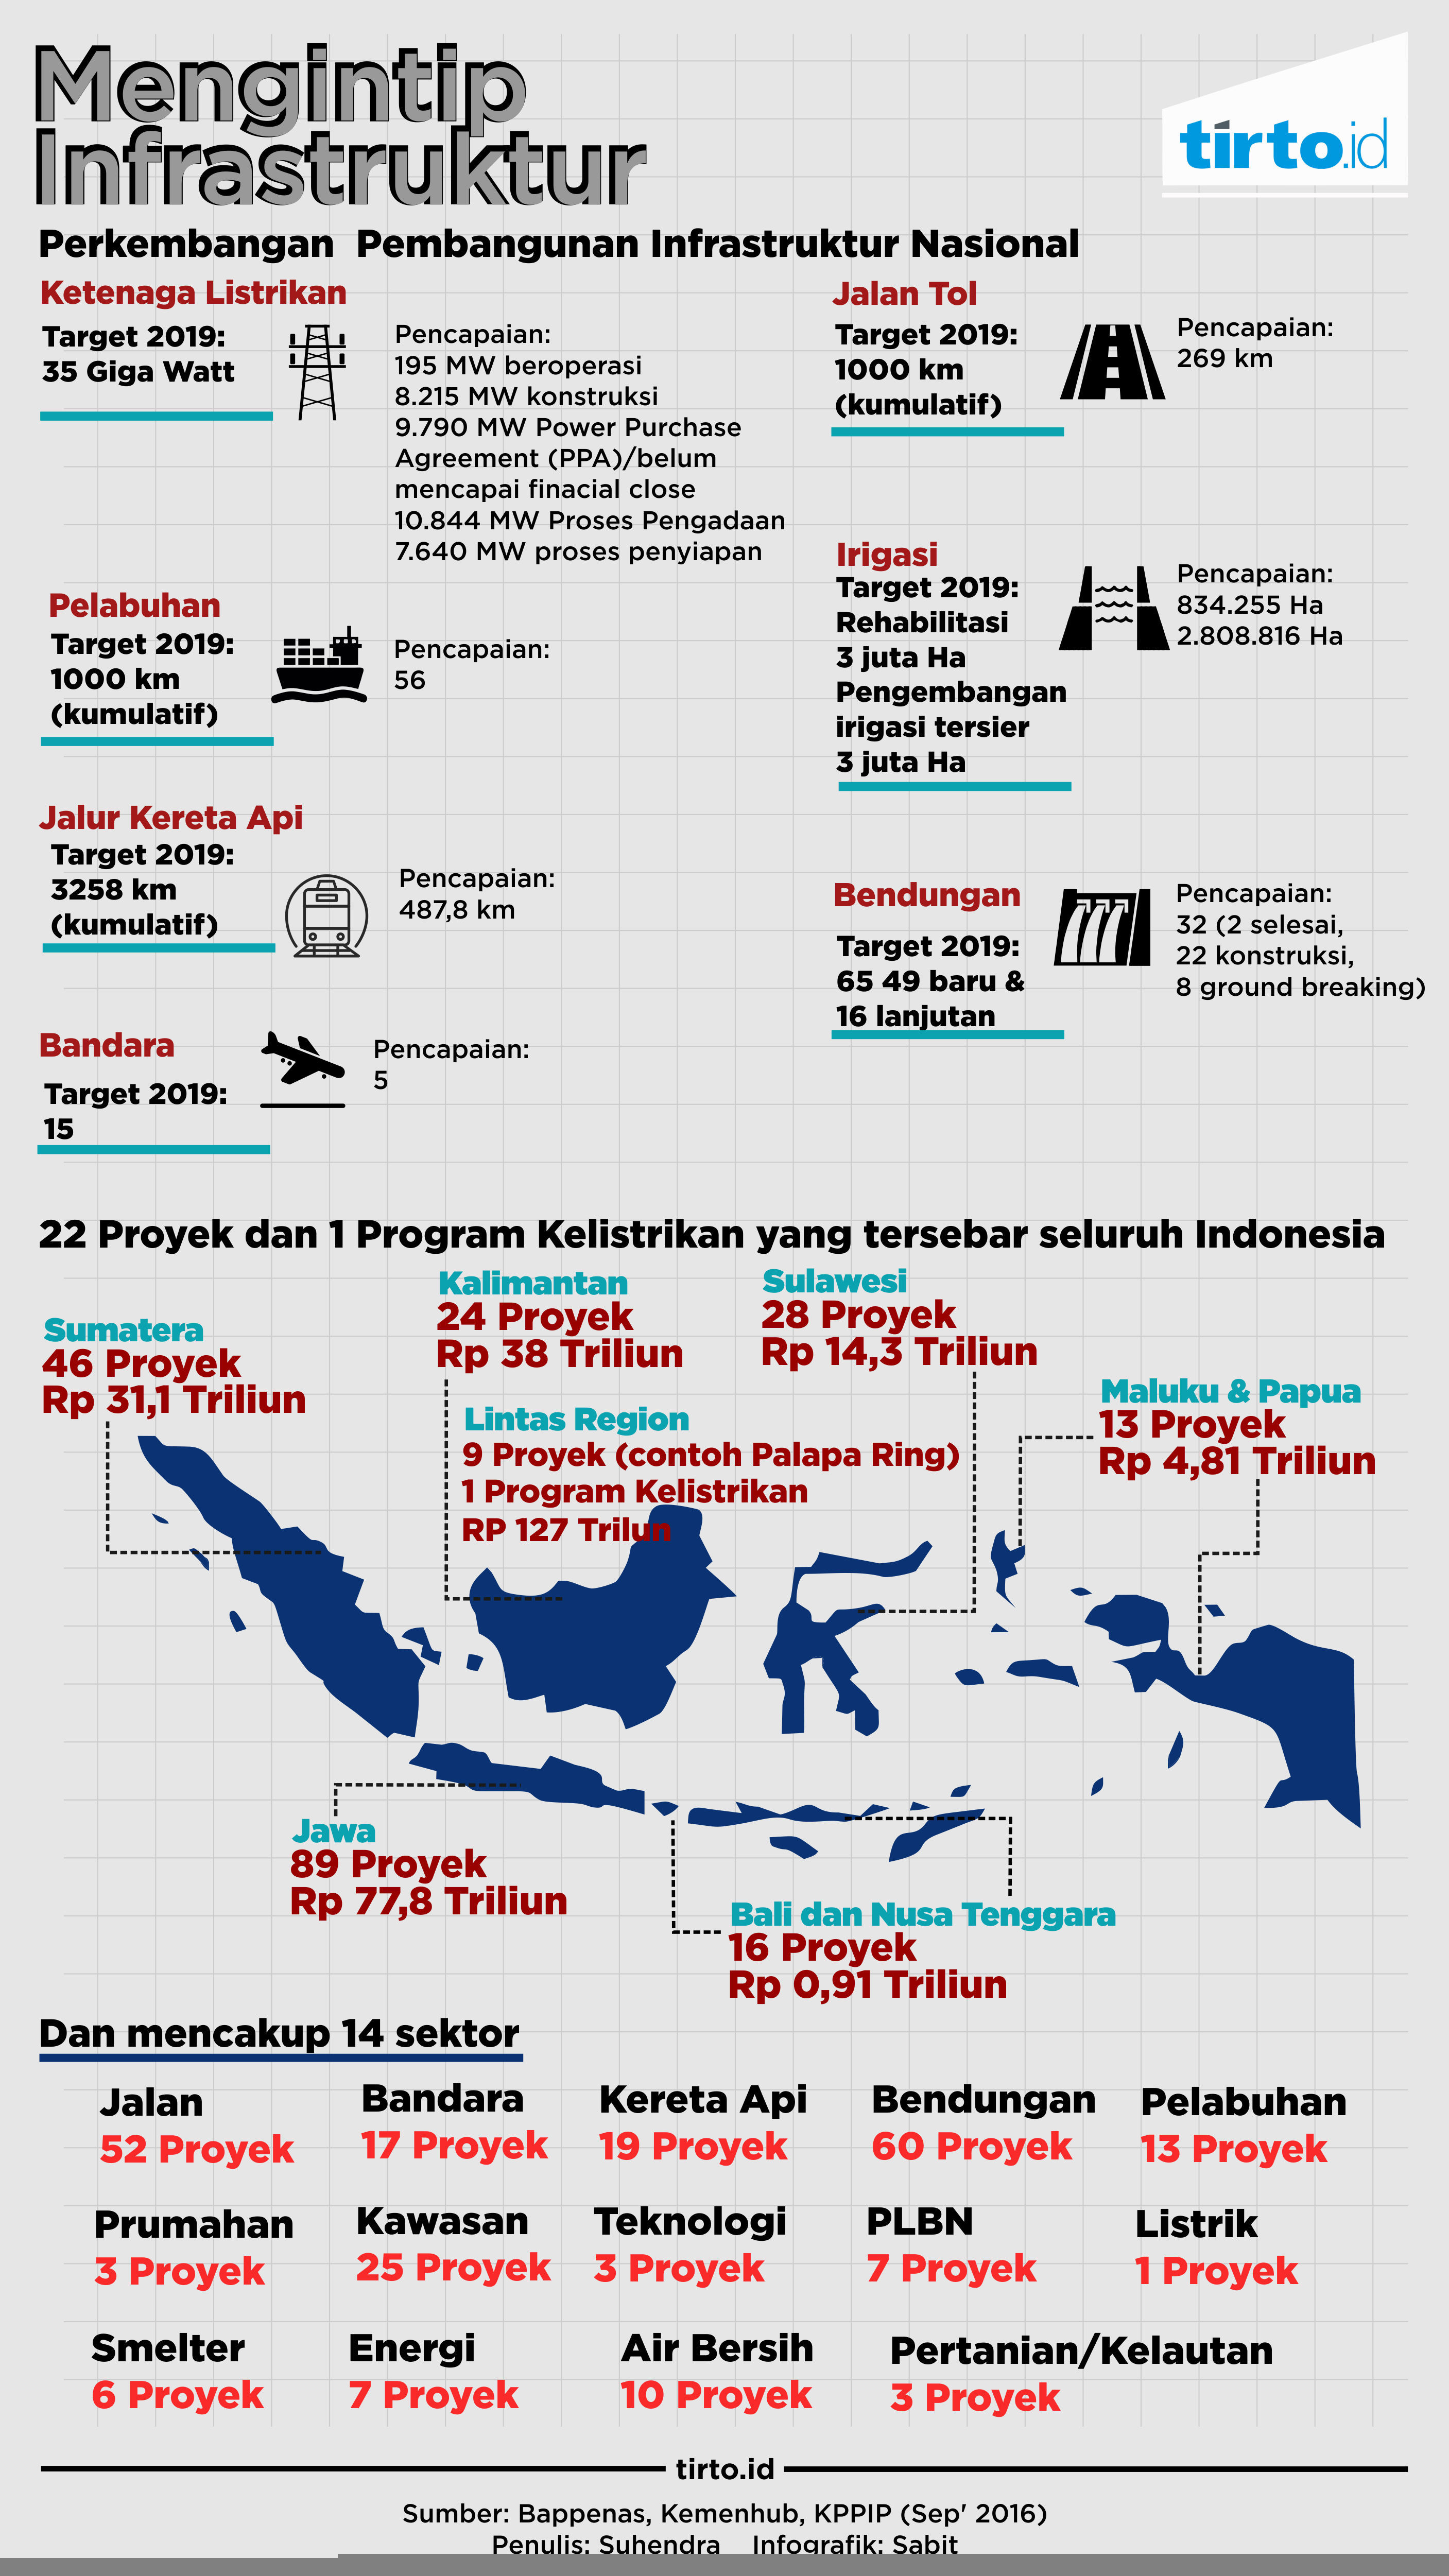 Infografik Mengintip Infrastruktur